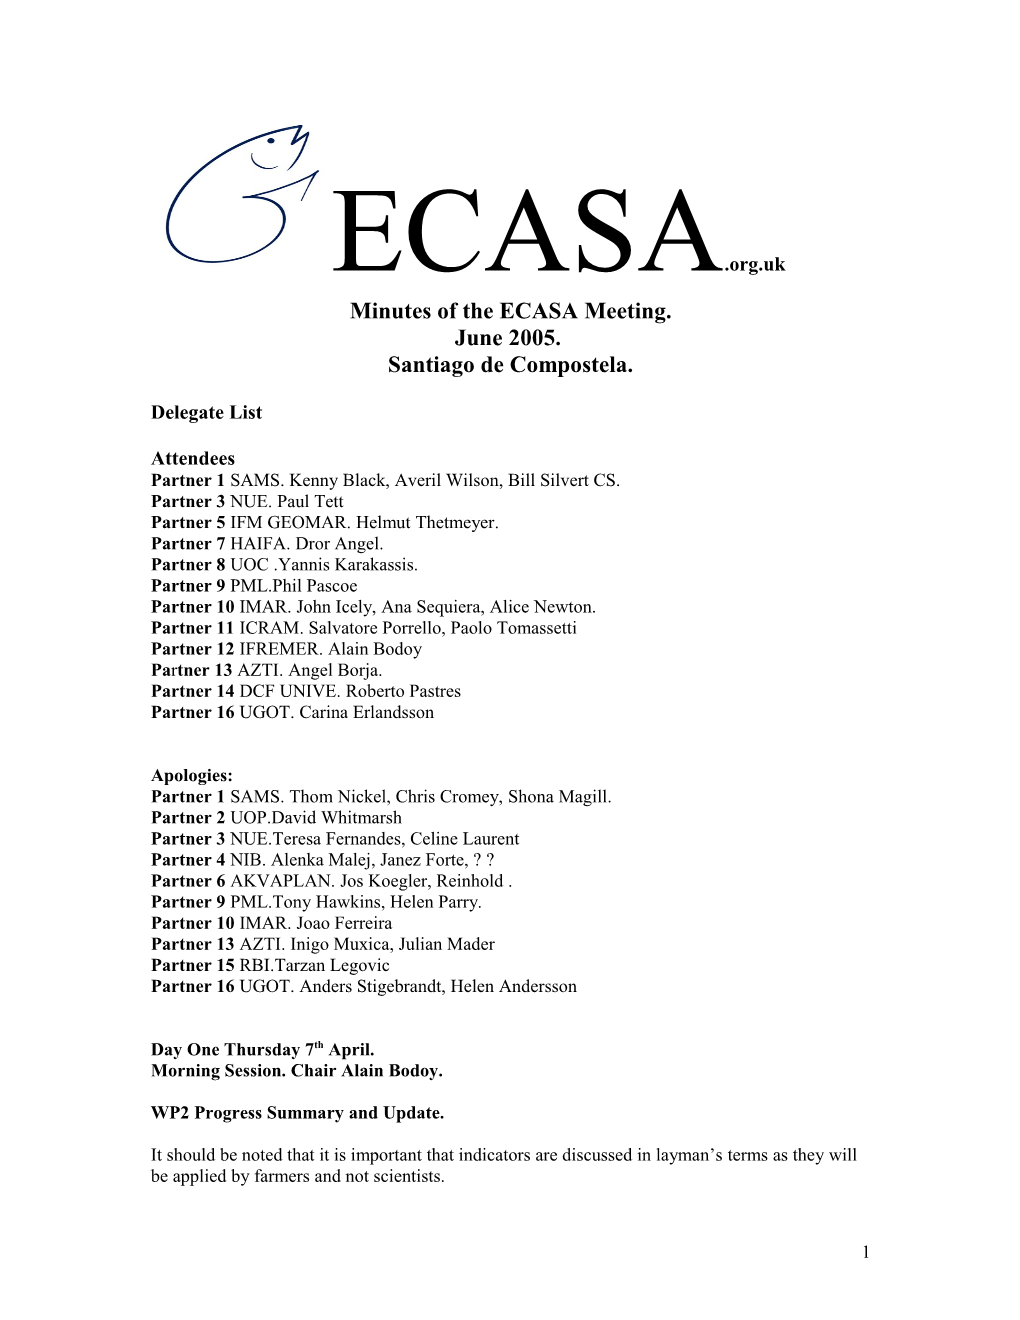 Minutes of the ECASA Meeting April 2005